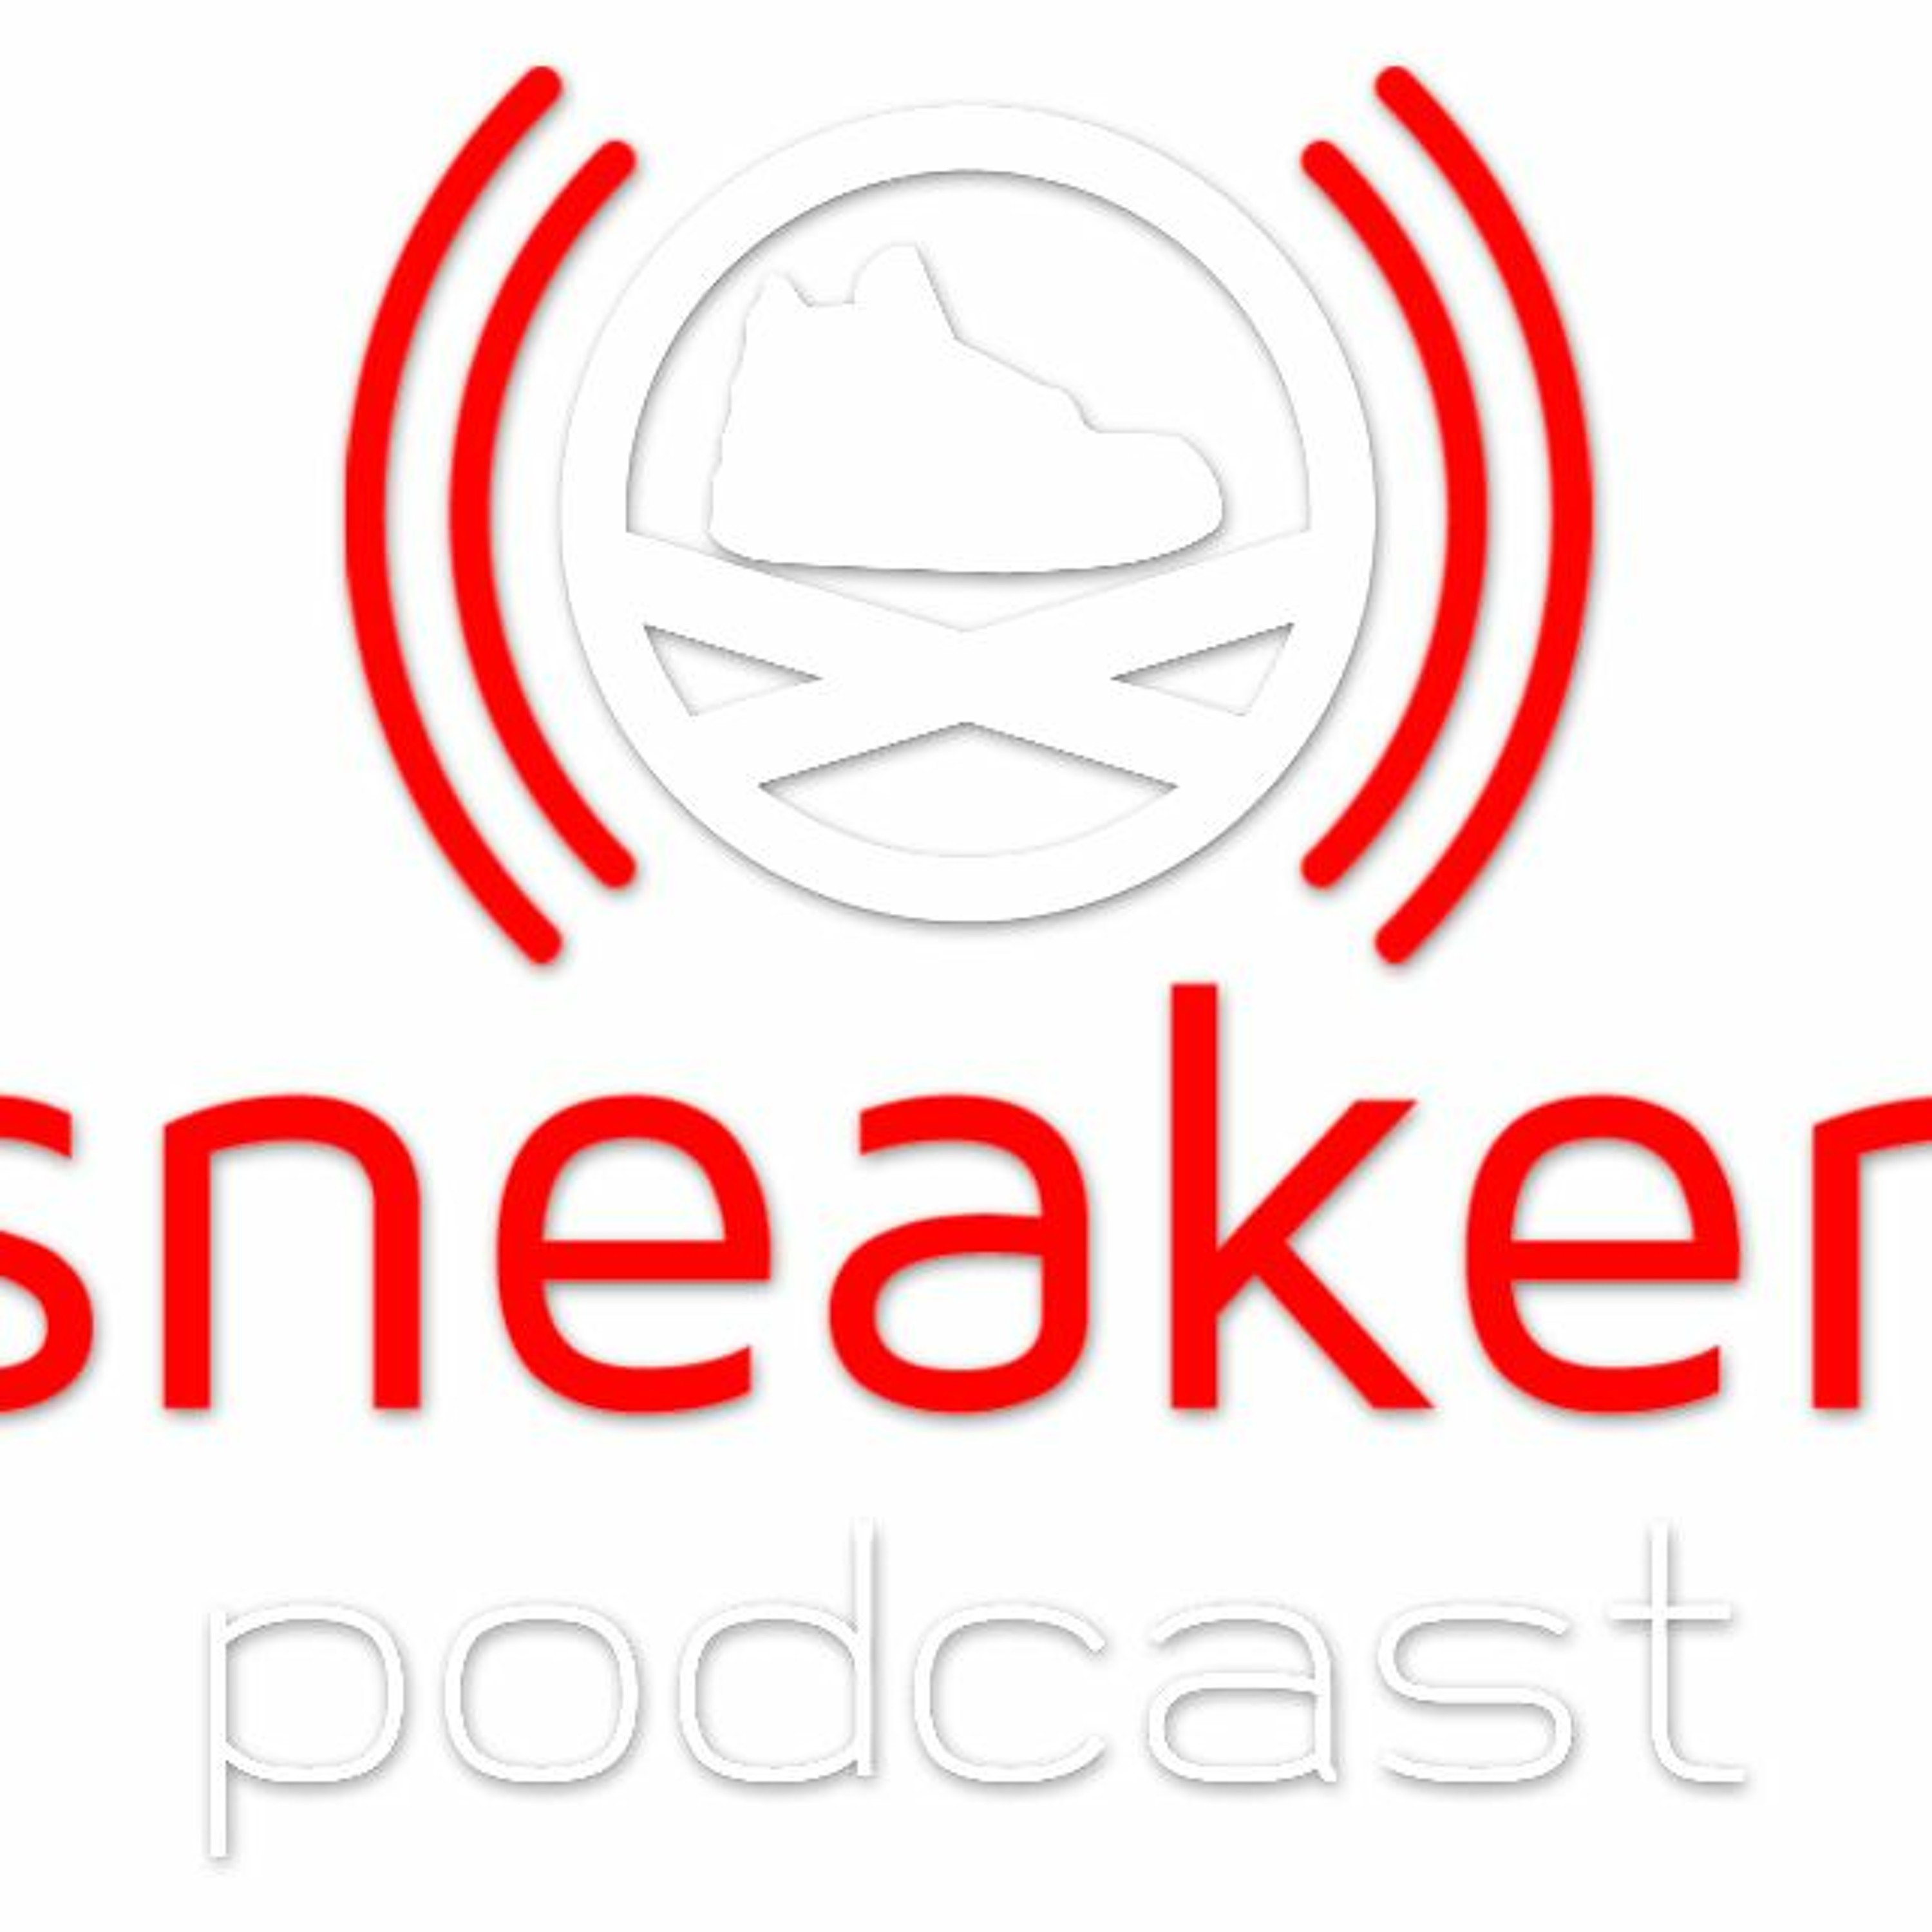 The Sneaker Box - Episode 84